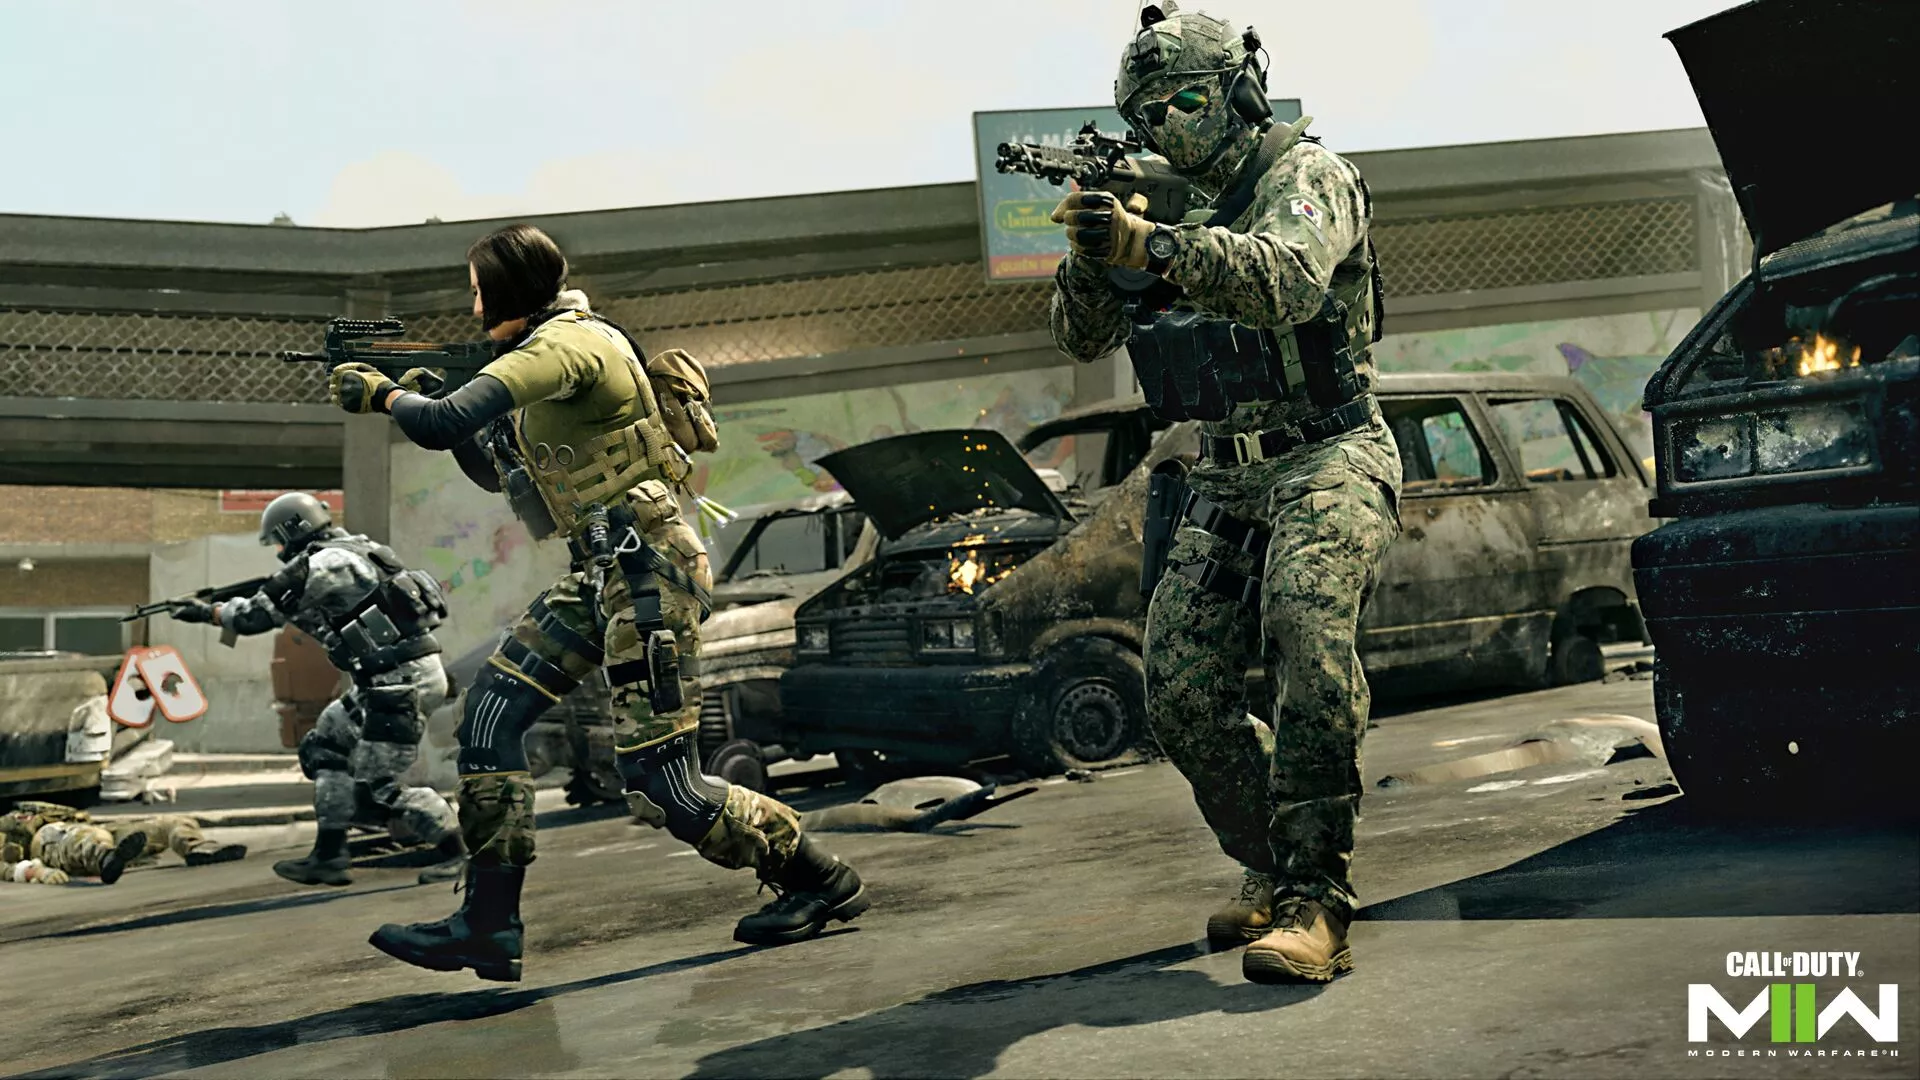 How to Call of Duty Modern Warfare 2.0 Game Steam Ship Exe Error 